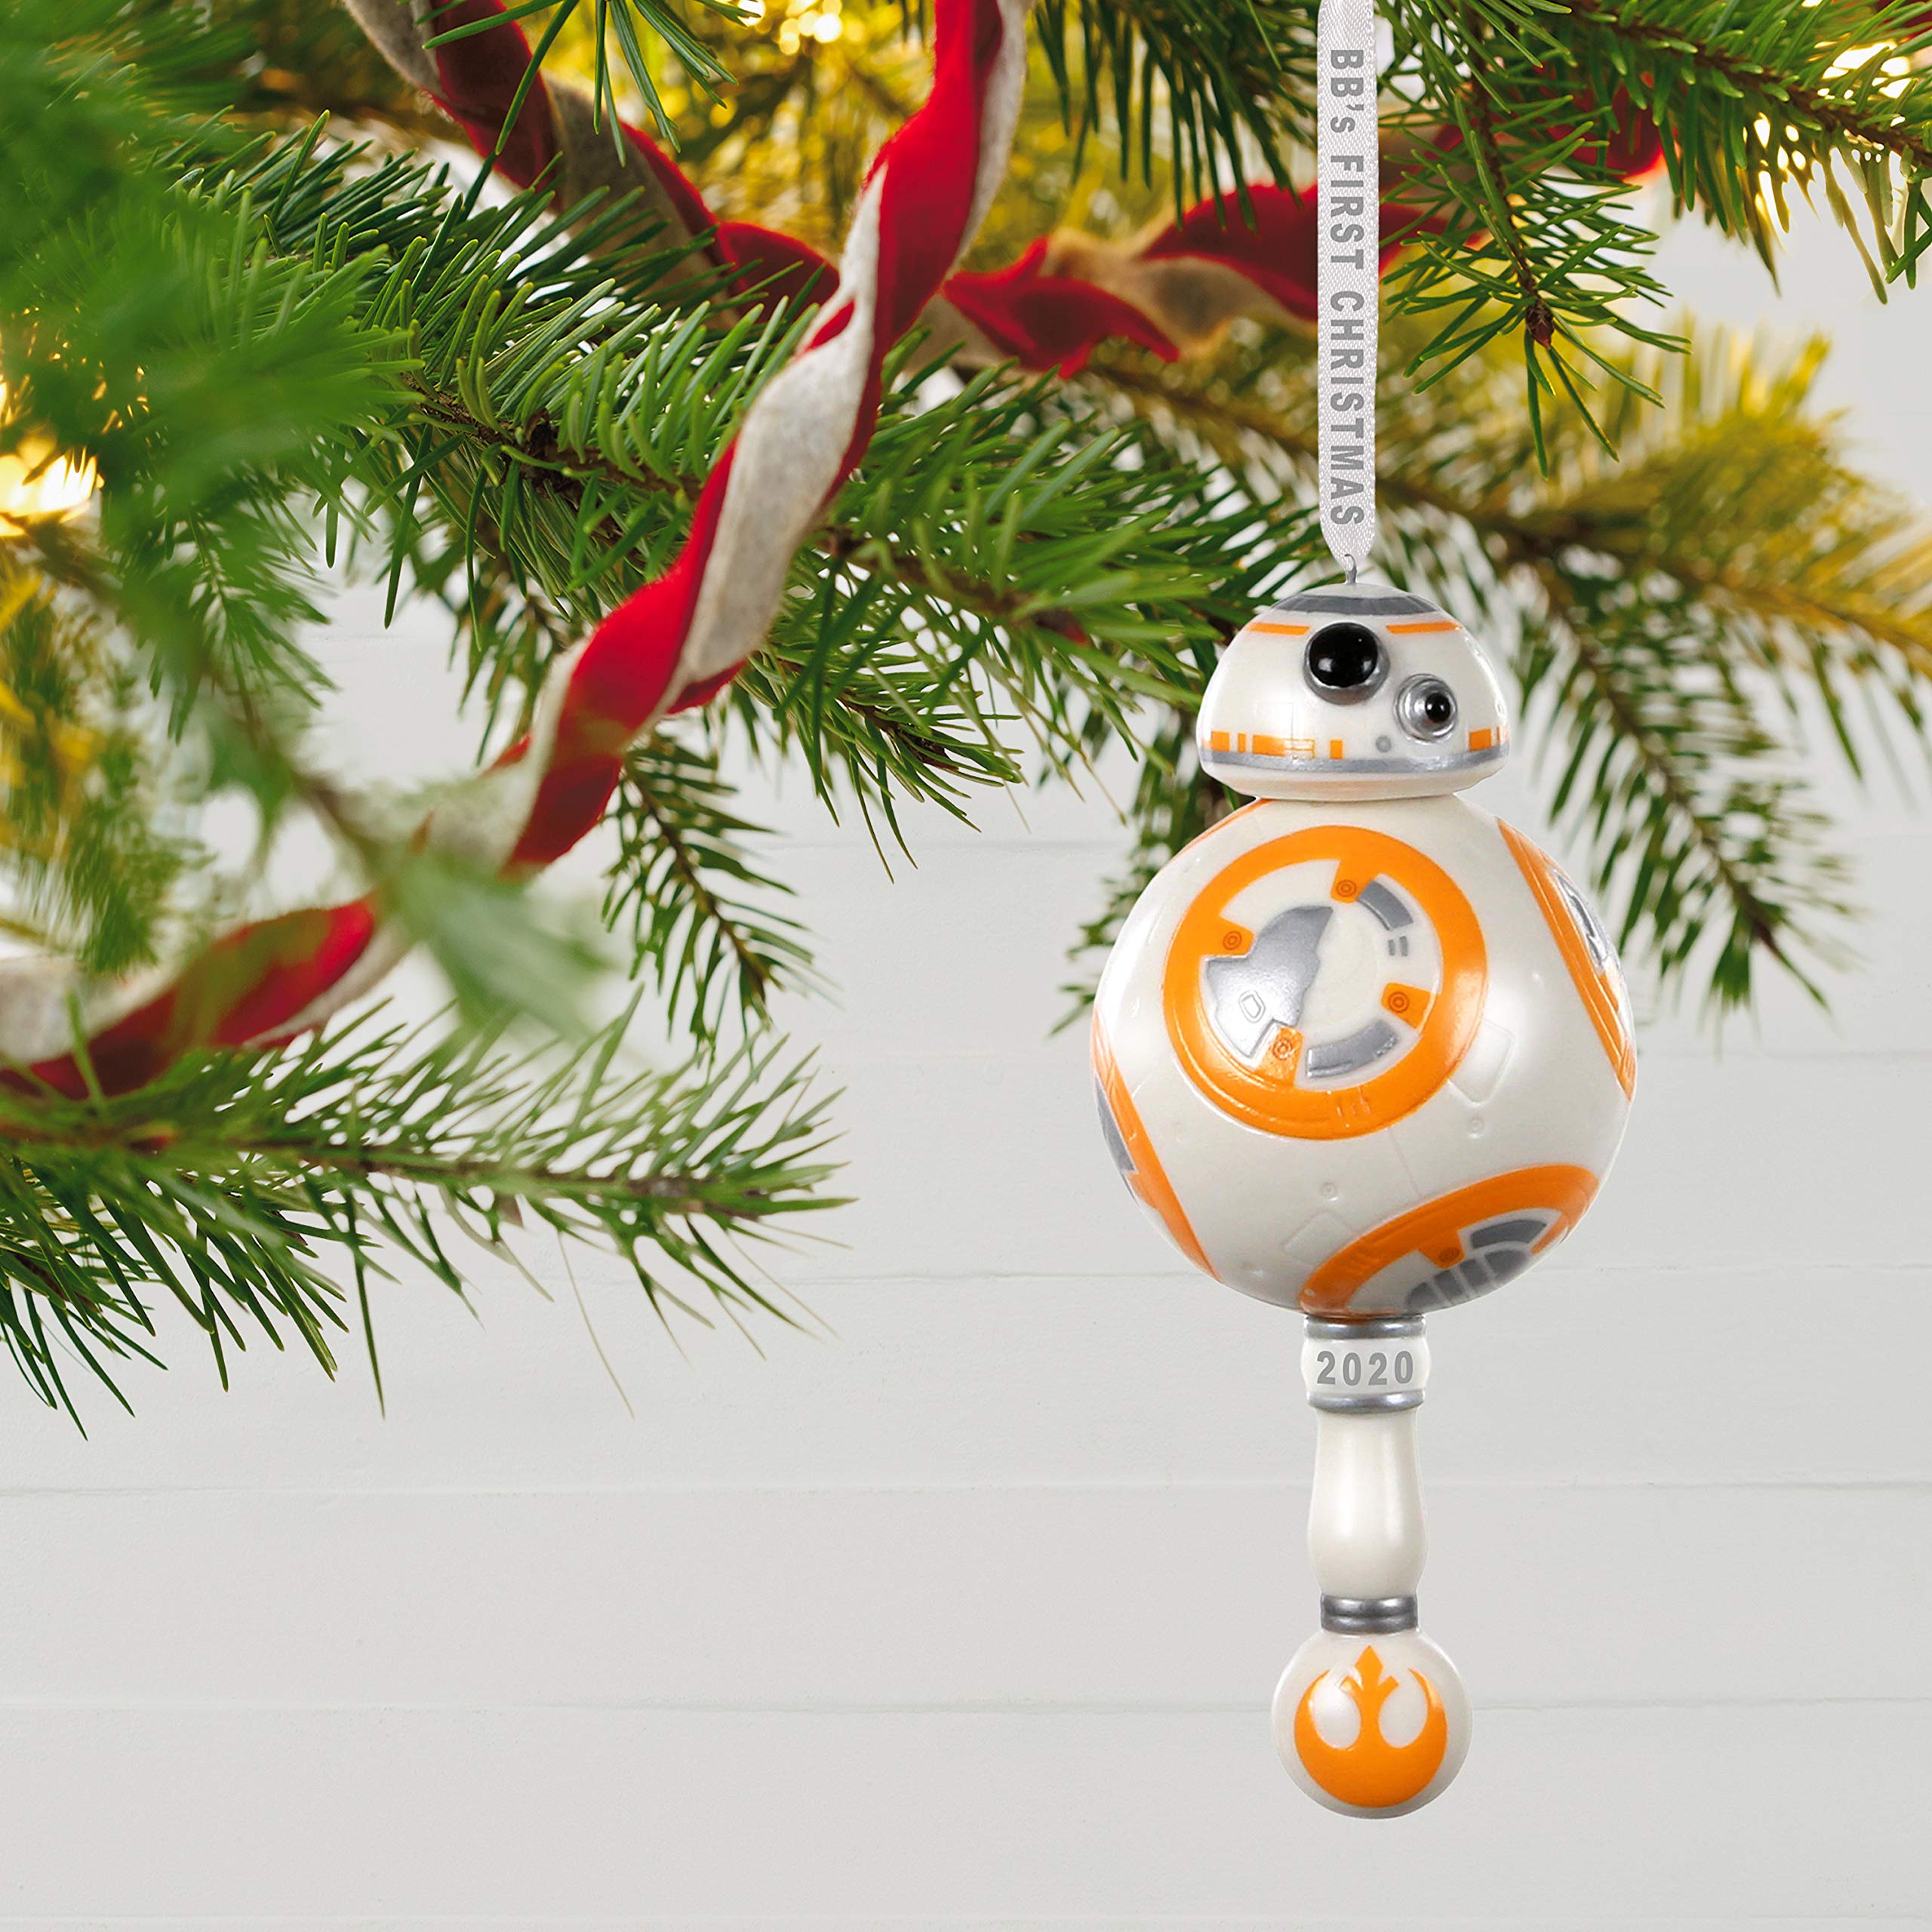 Hallmark Keepsake Christmas Ornament 2020, Star Wars: The Force Awakens BB-8 with Sound